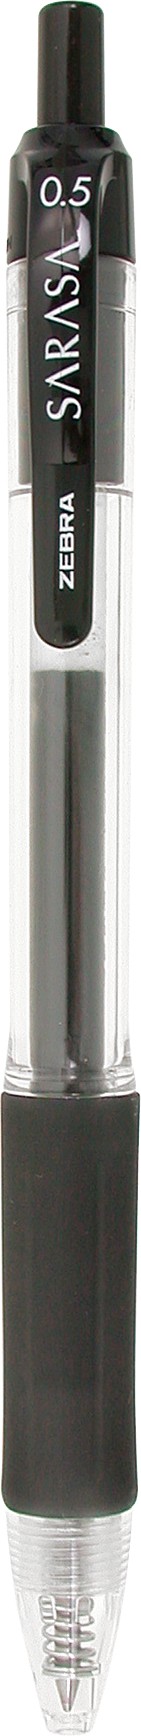 SARASA dry X20 Gel Retractable – Zebra Pen